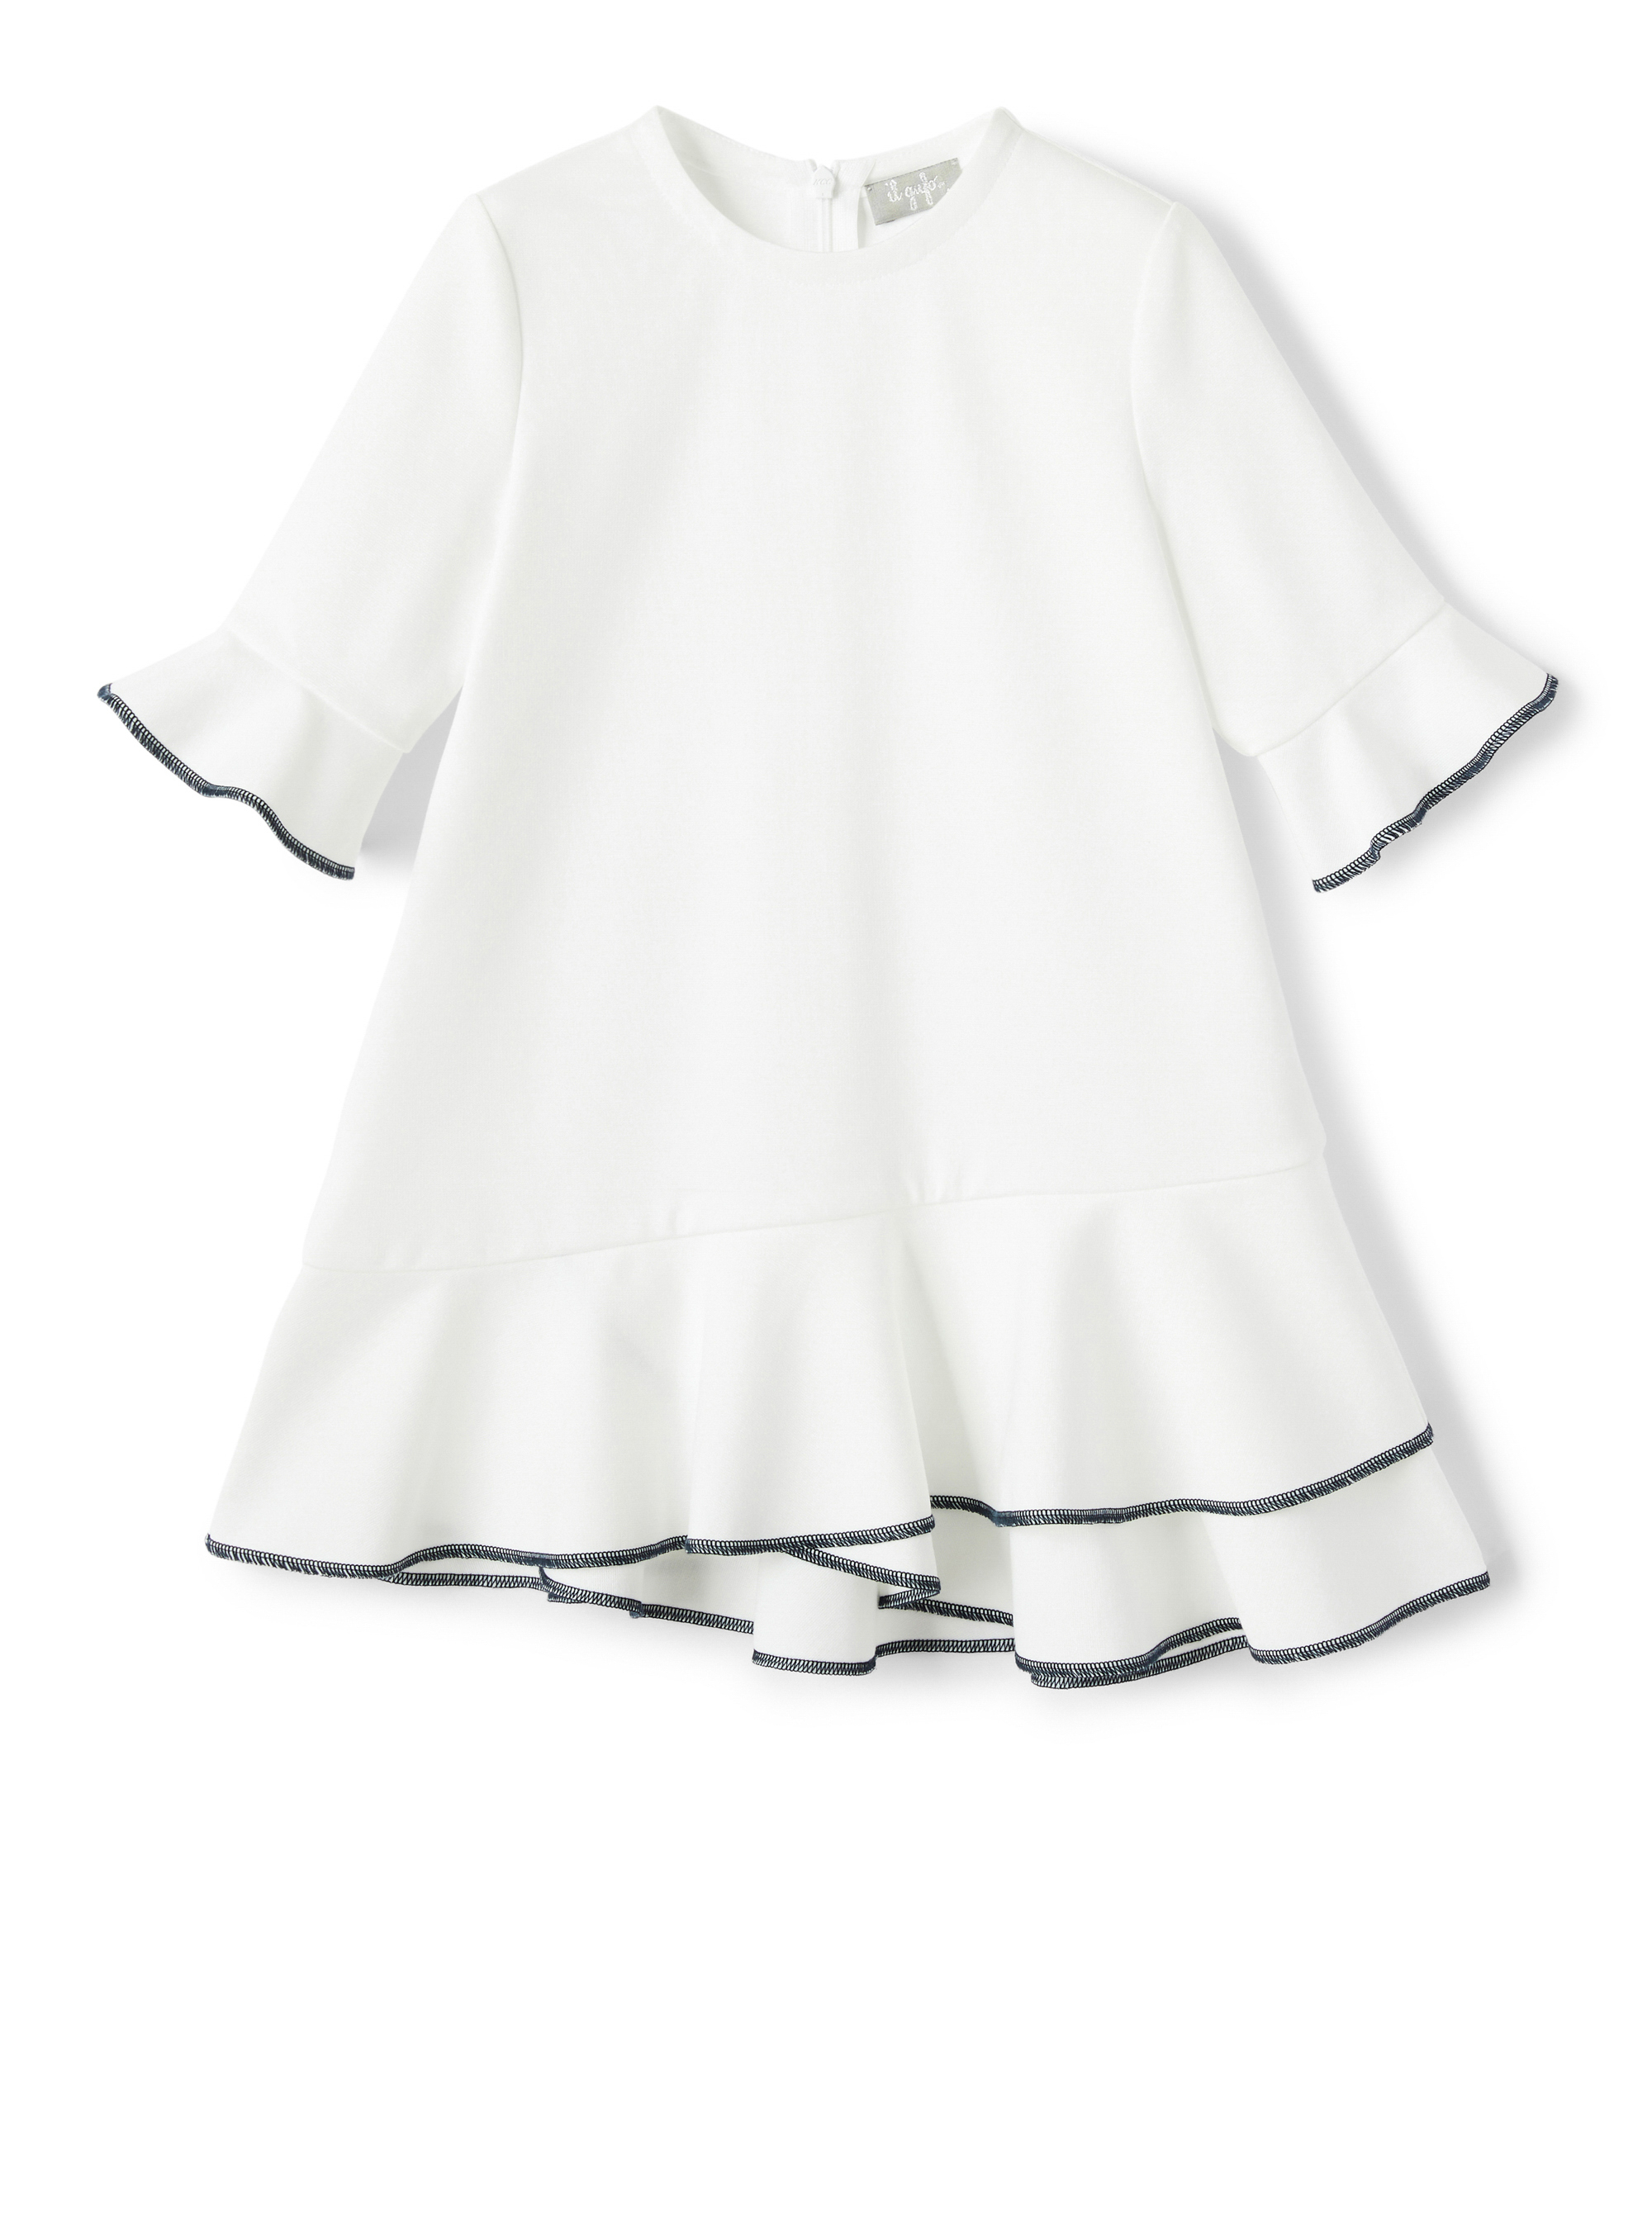 Rome stitch dress with flounces - White | Il Gufo